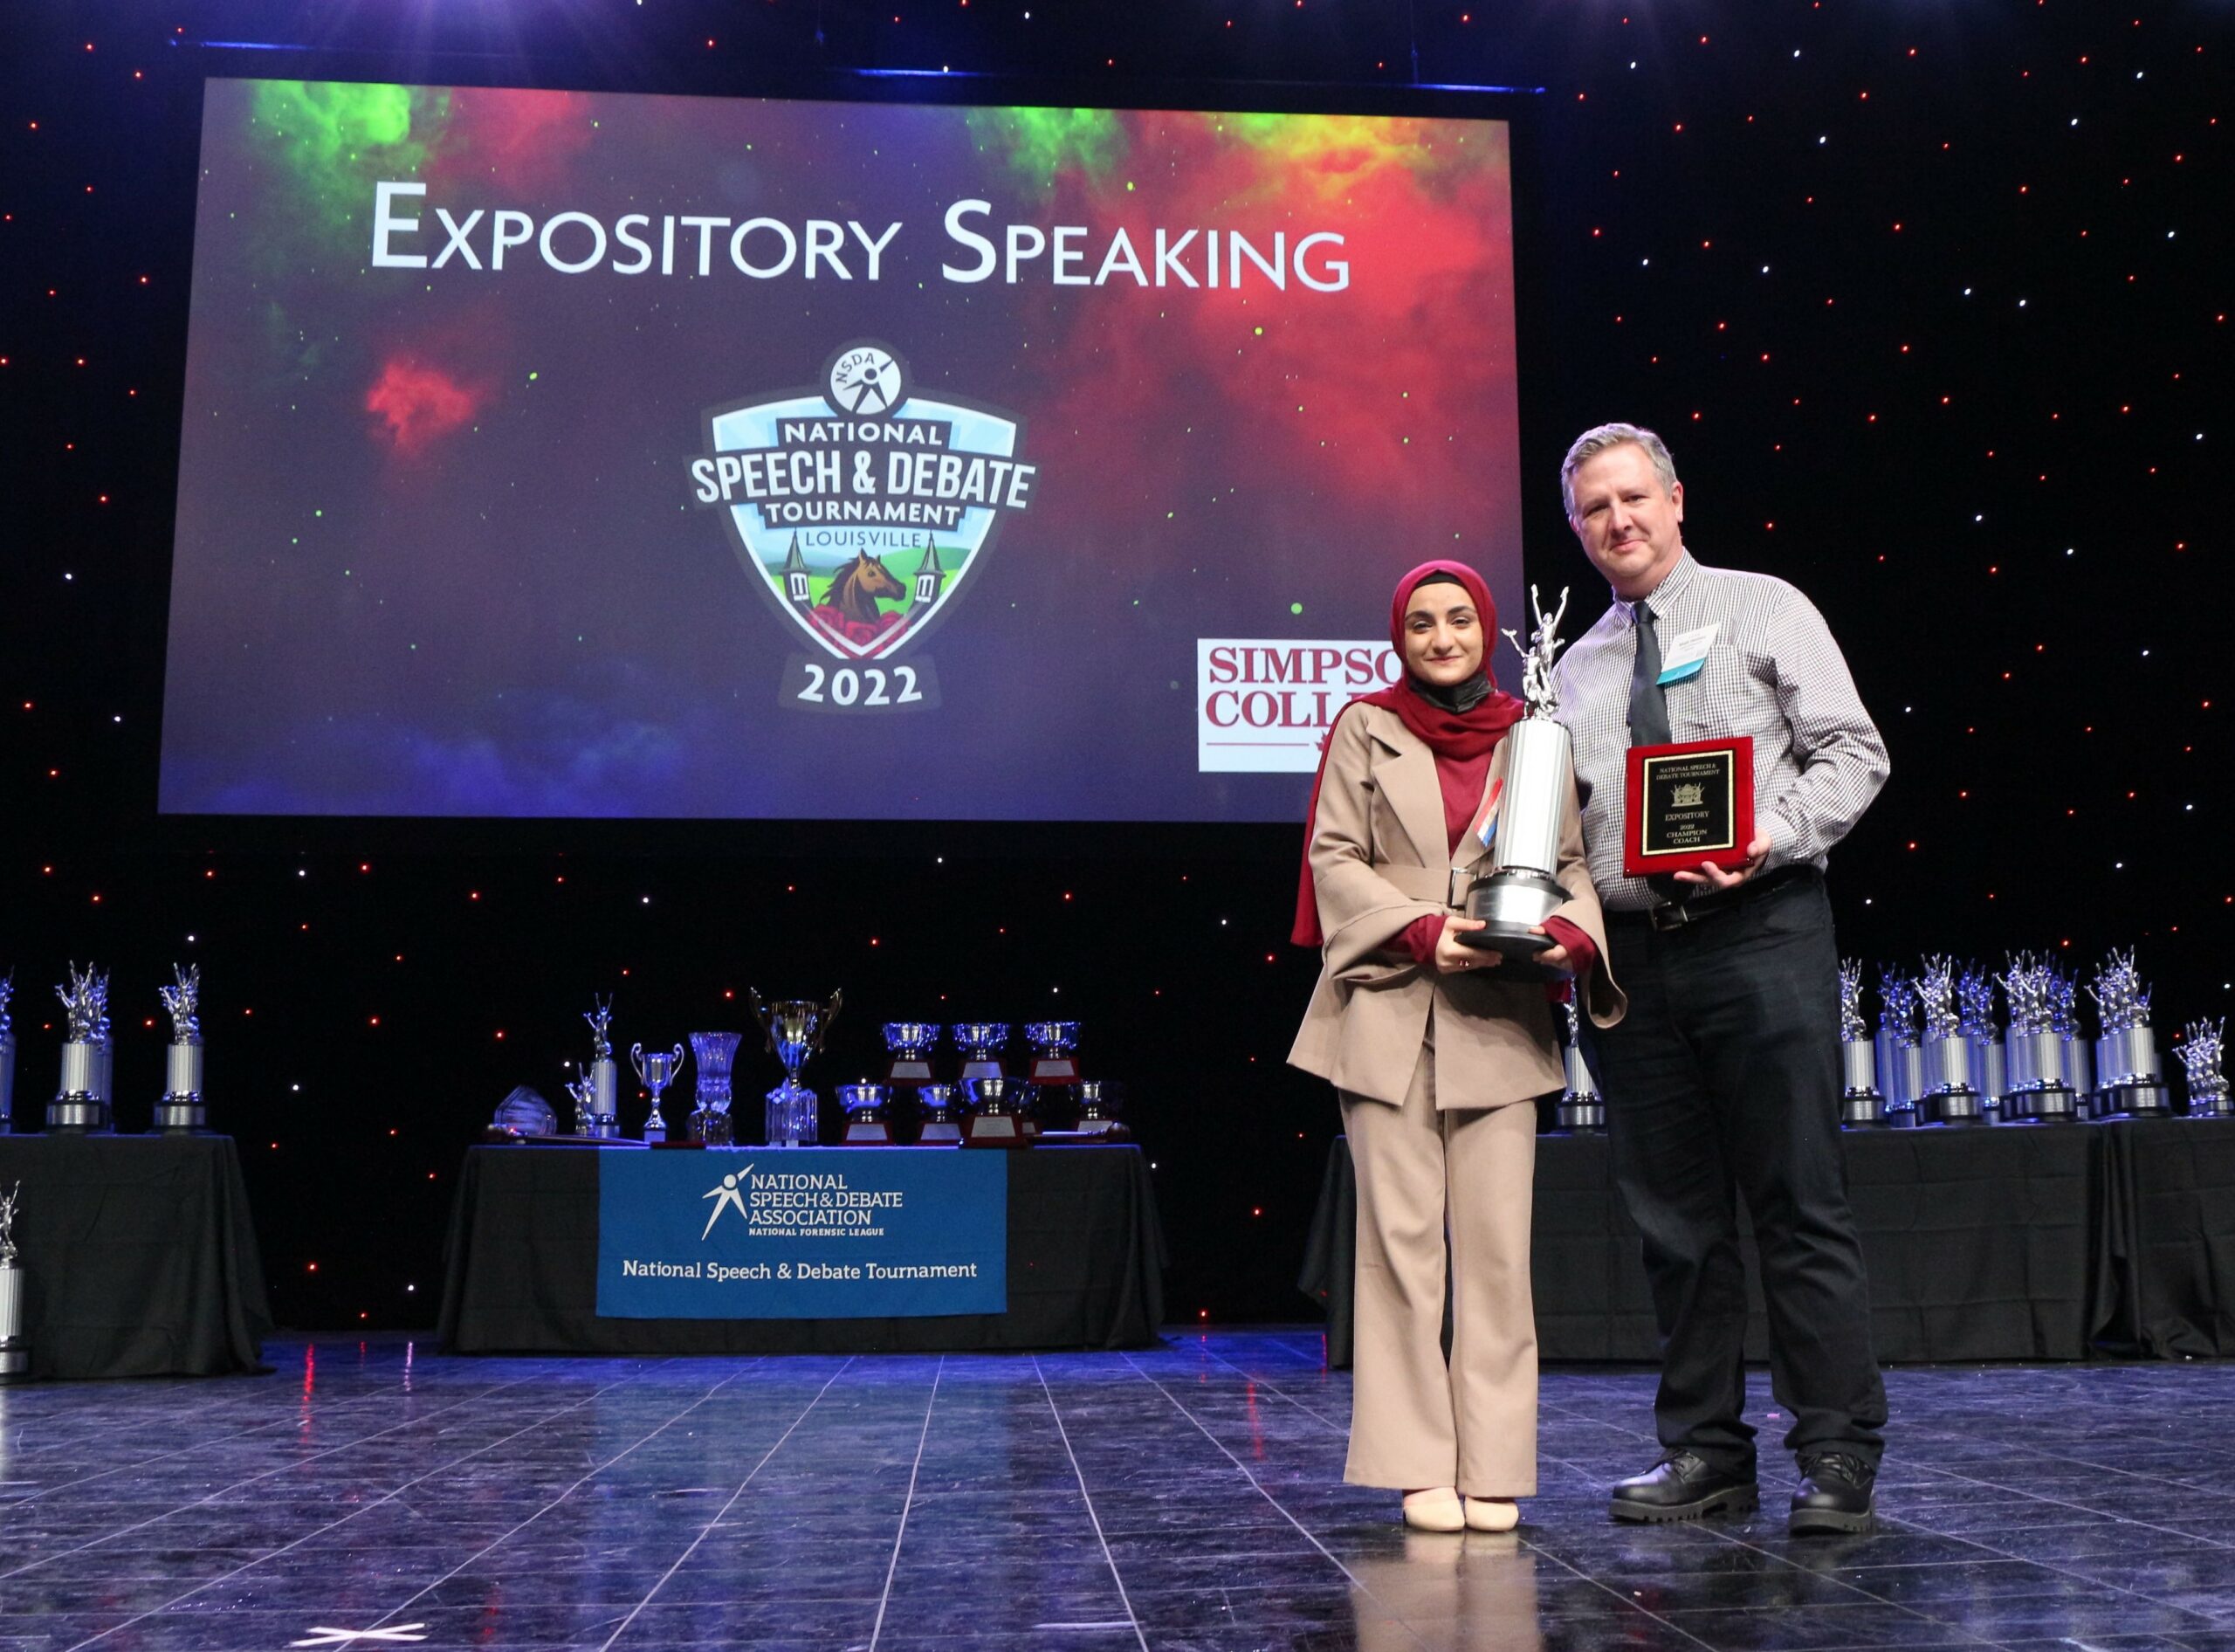 2022 National Speech & Debate Tournament Expository Speaking Champion